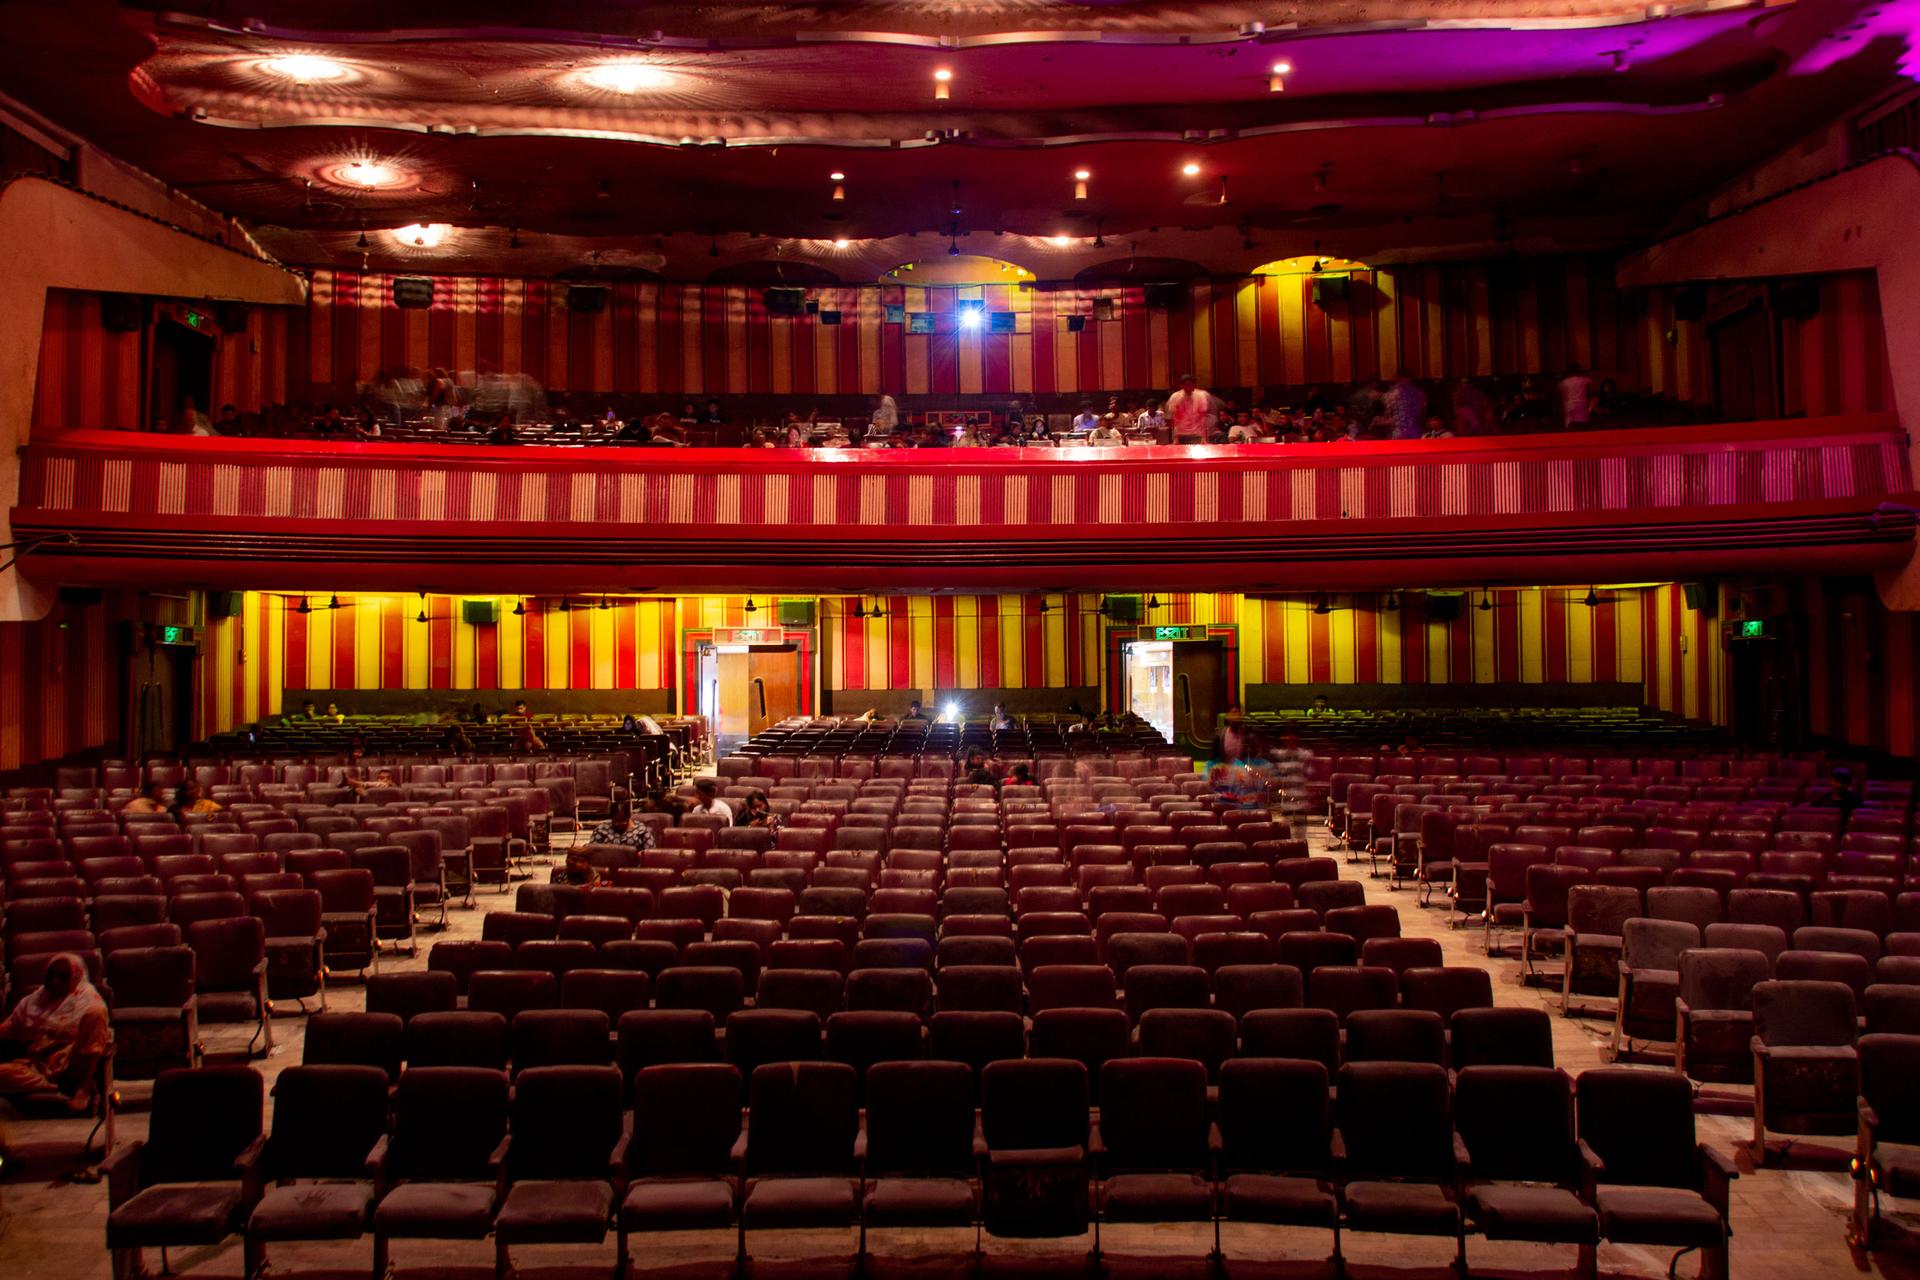 The Maratha Mandir theater can seat hundreds.